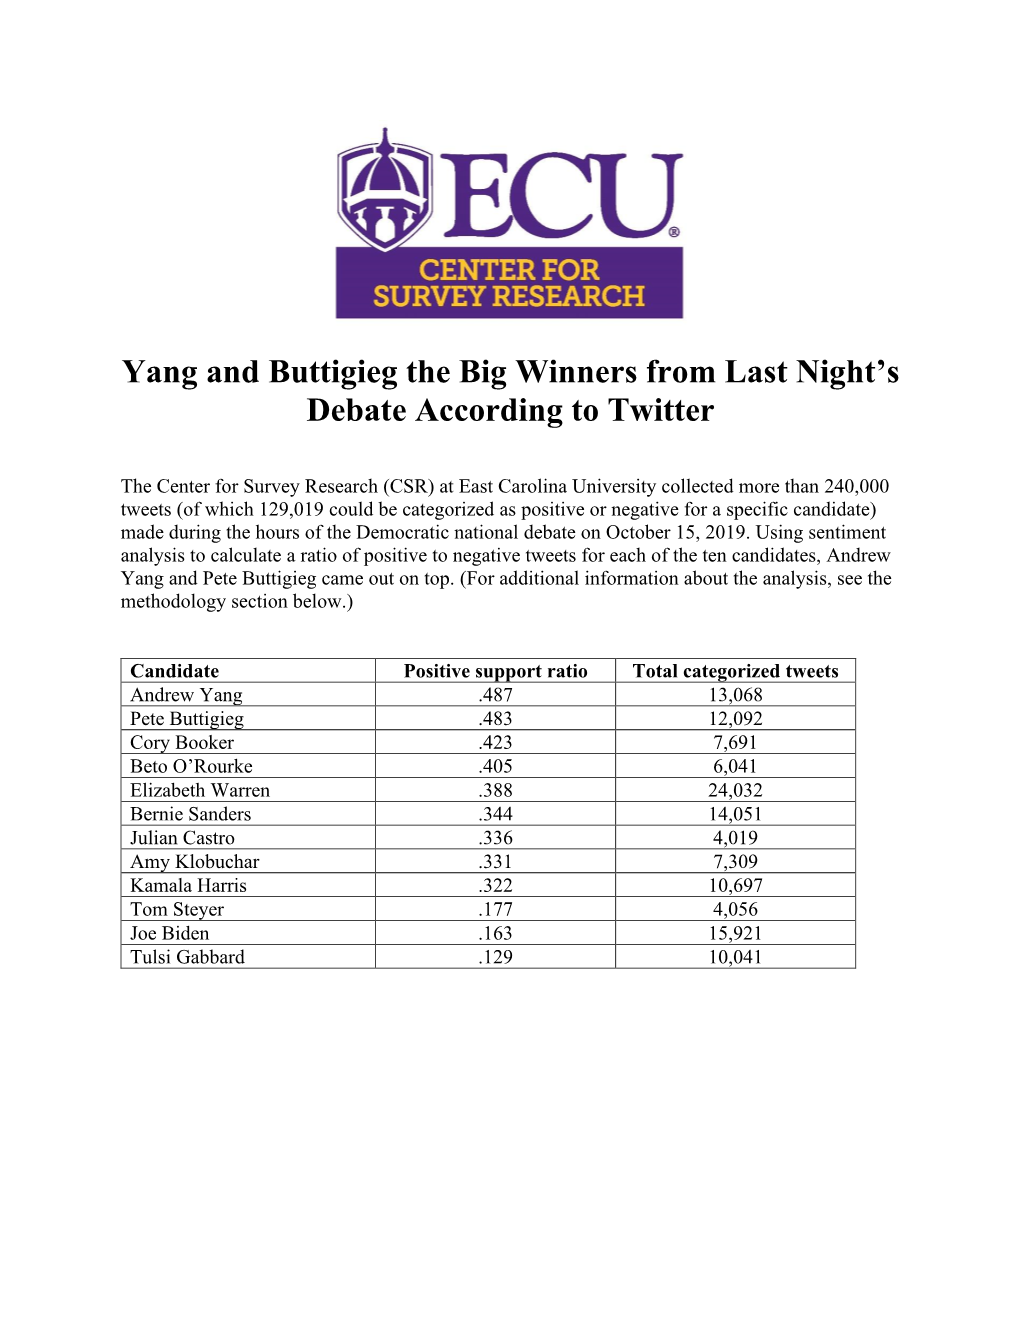 Yang and Buttigieg the Big Winners from Last Night's Debate According